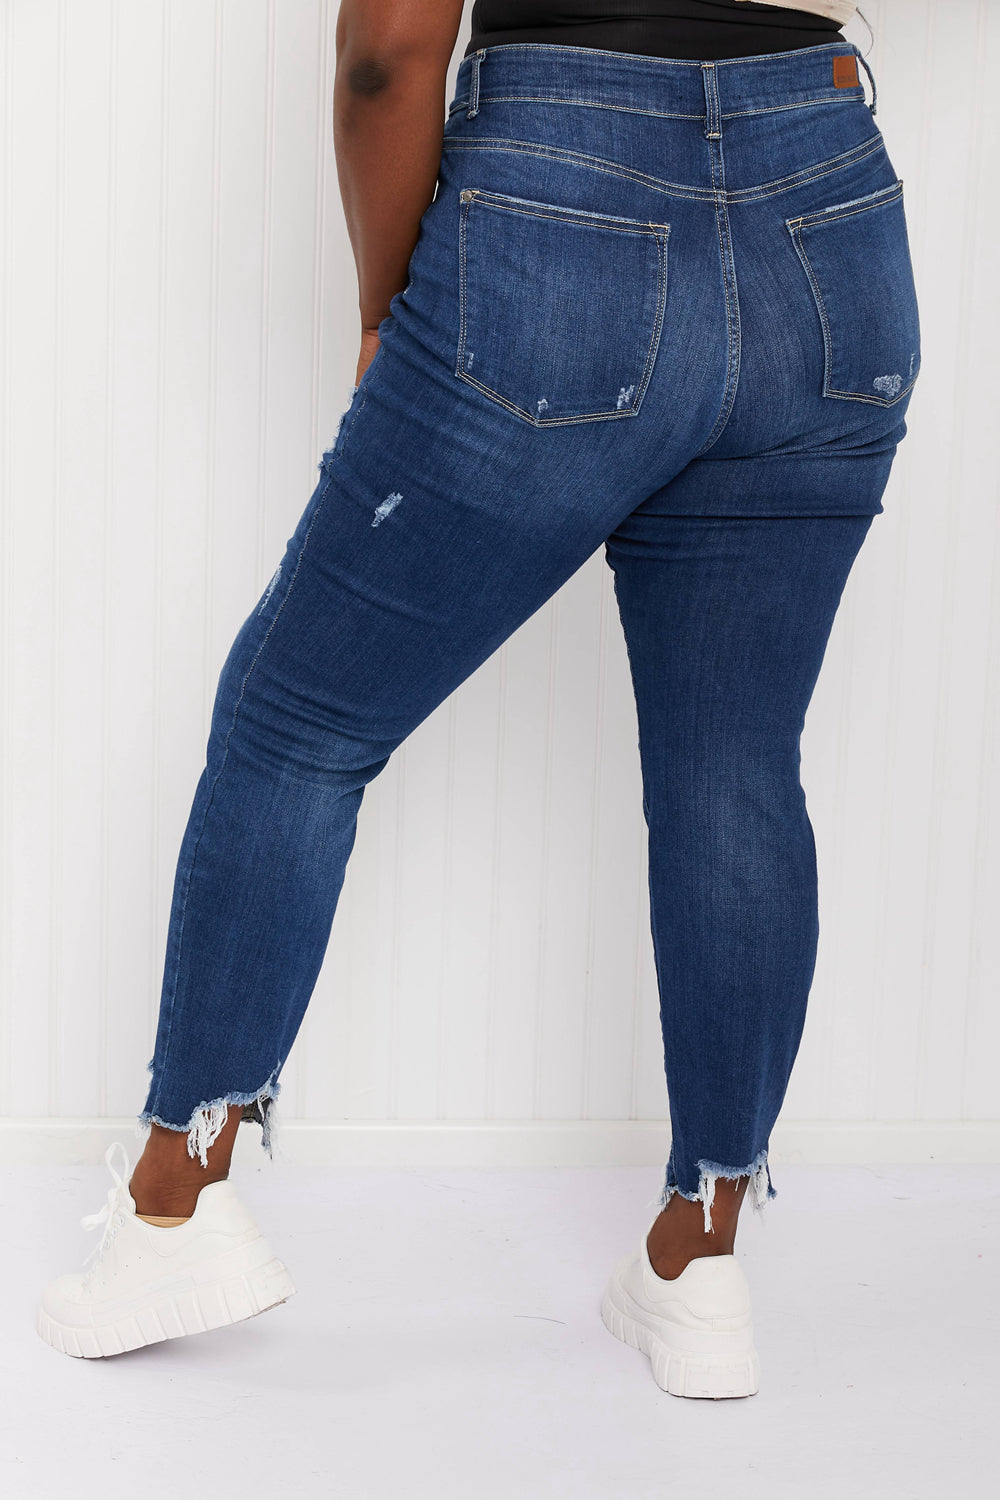 Judy Blue Kendall Full Size Shark-Bite Slim Jeans Jeans JT's Designer Fashion